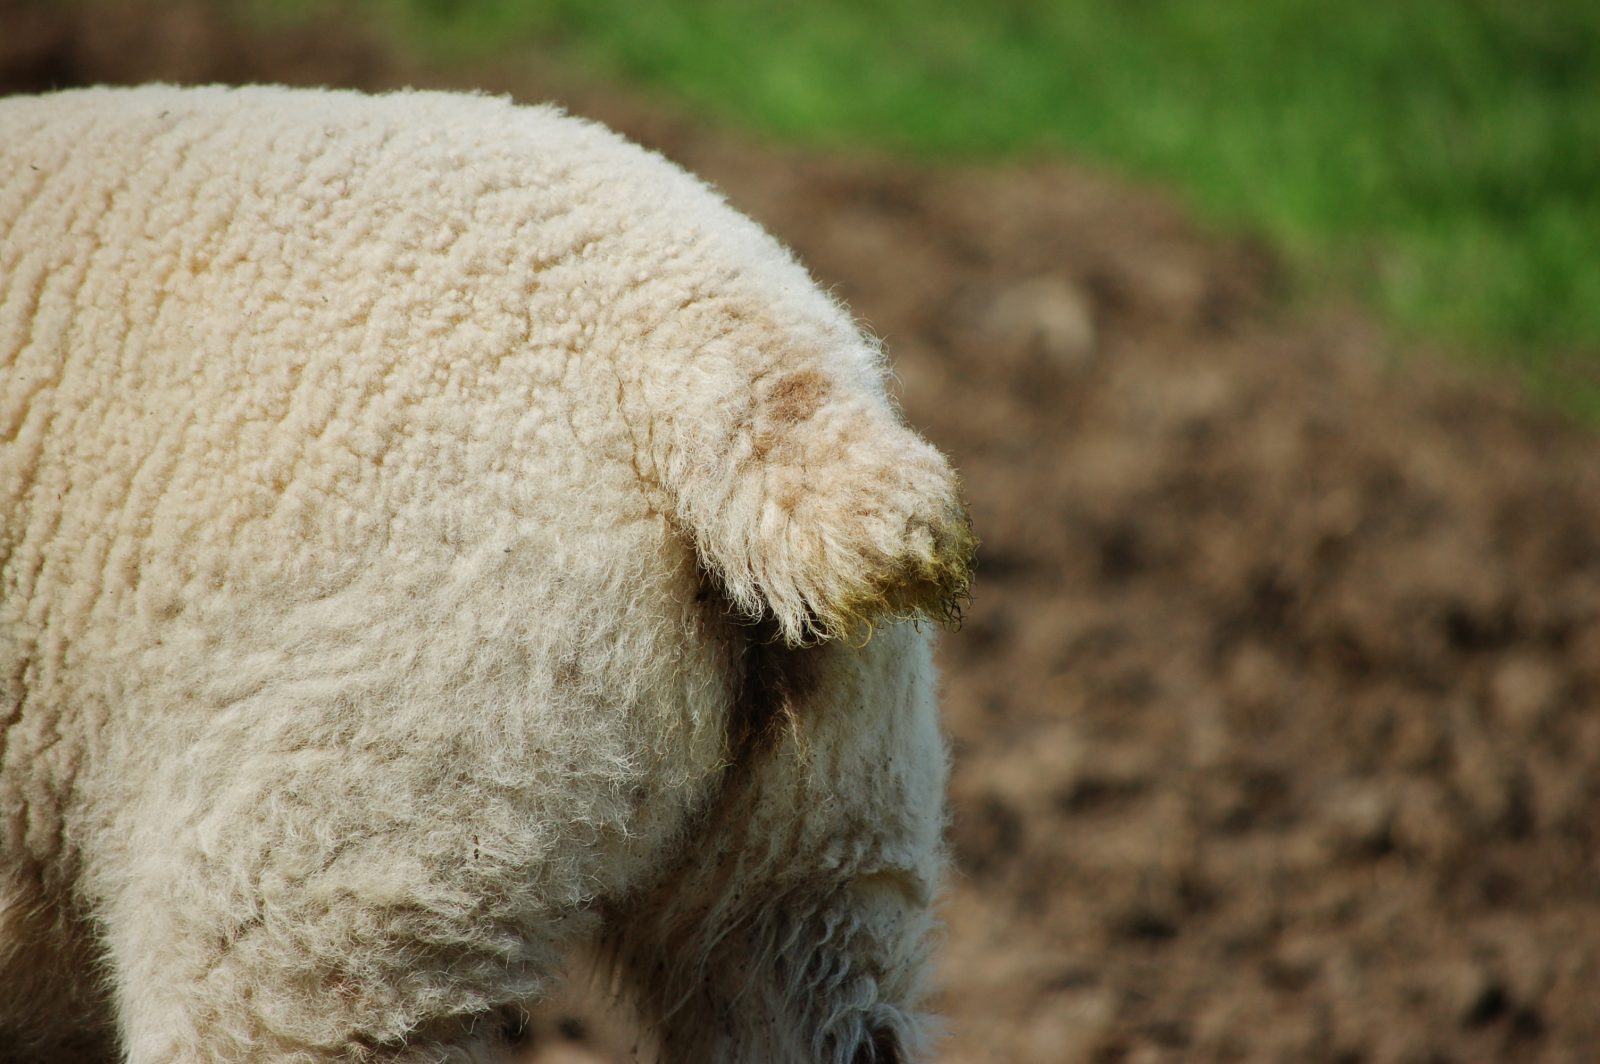 Closeup of a tail docked sheep.